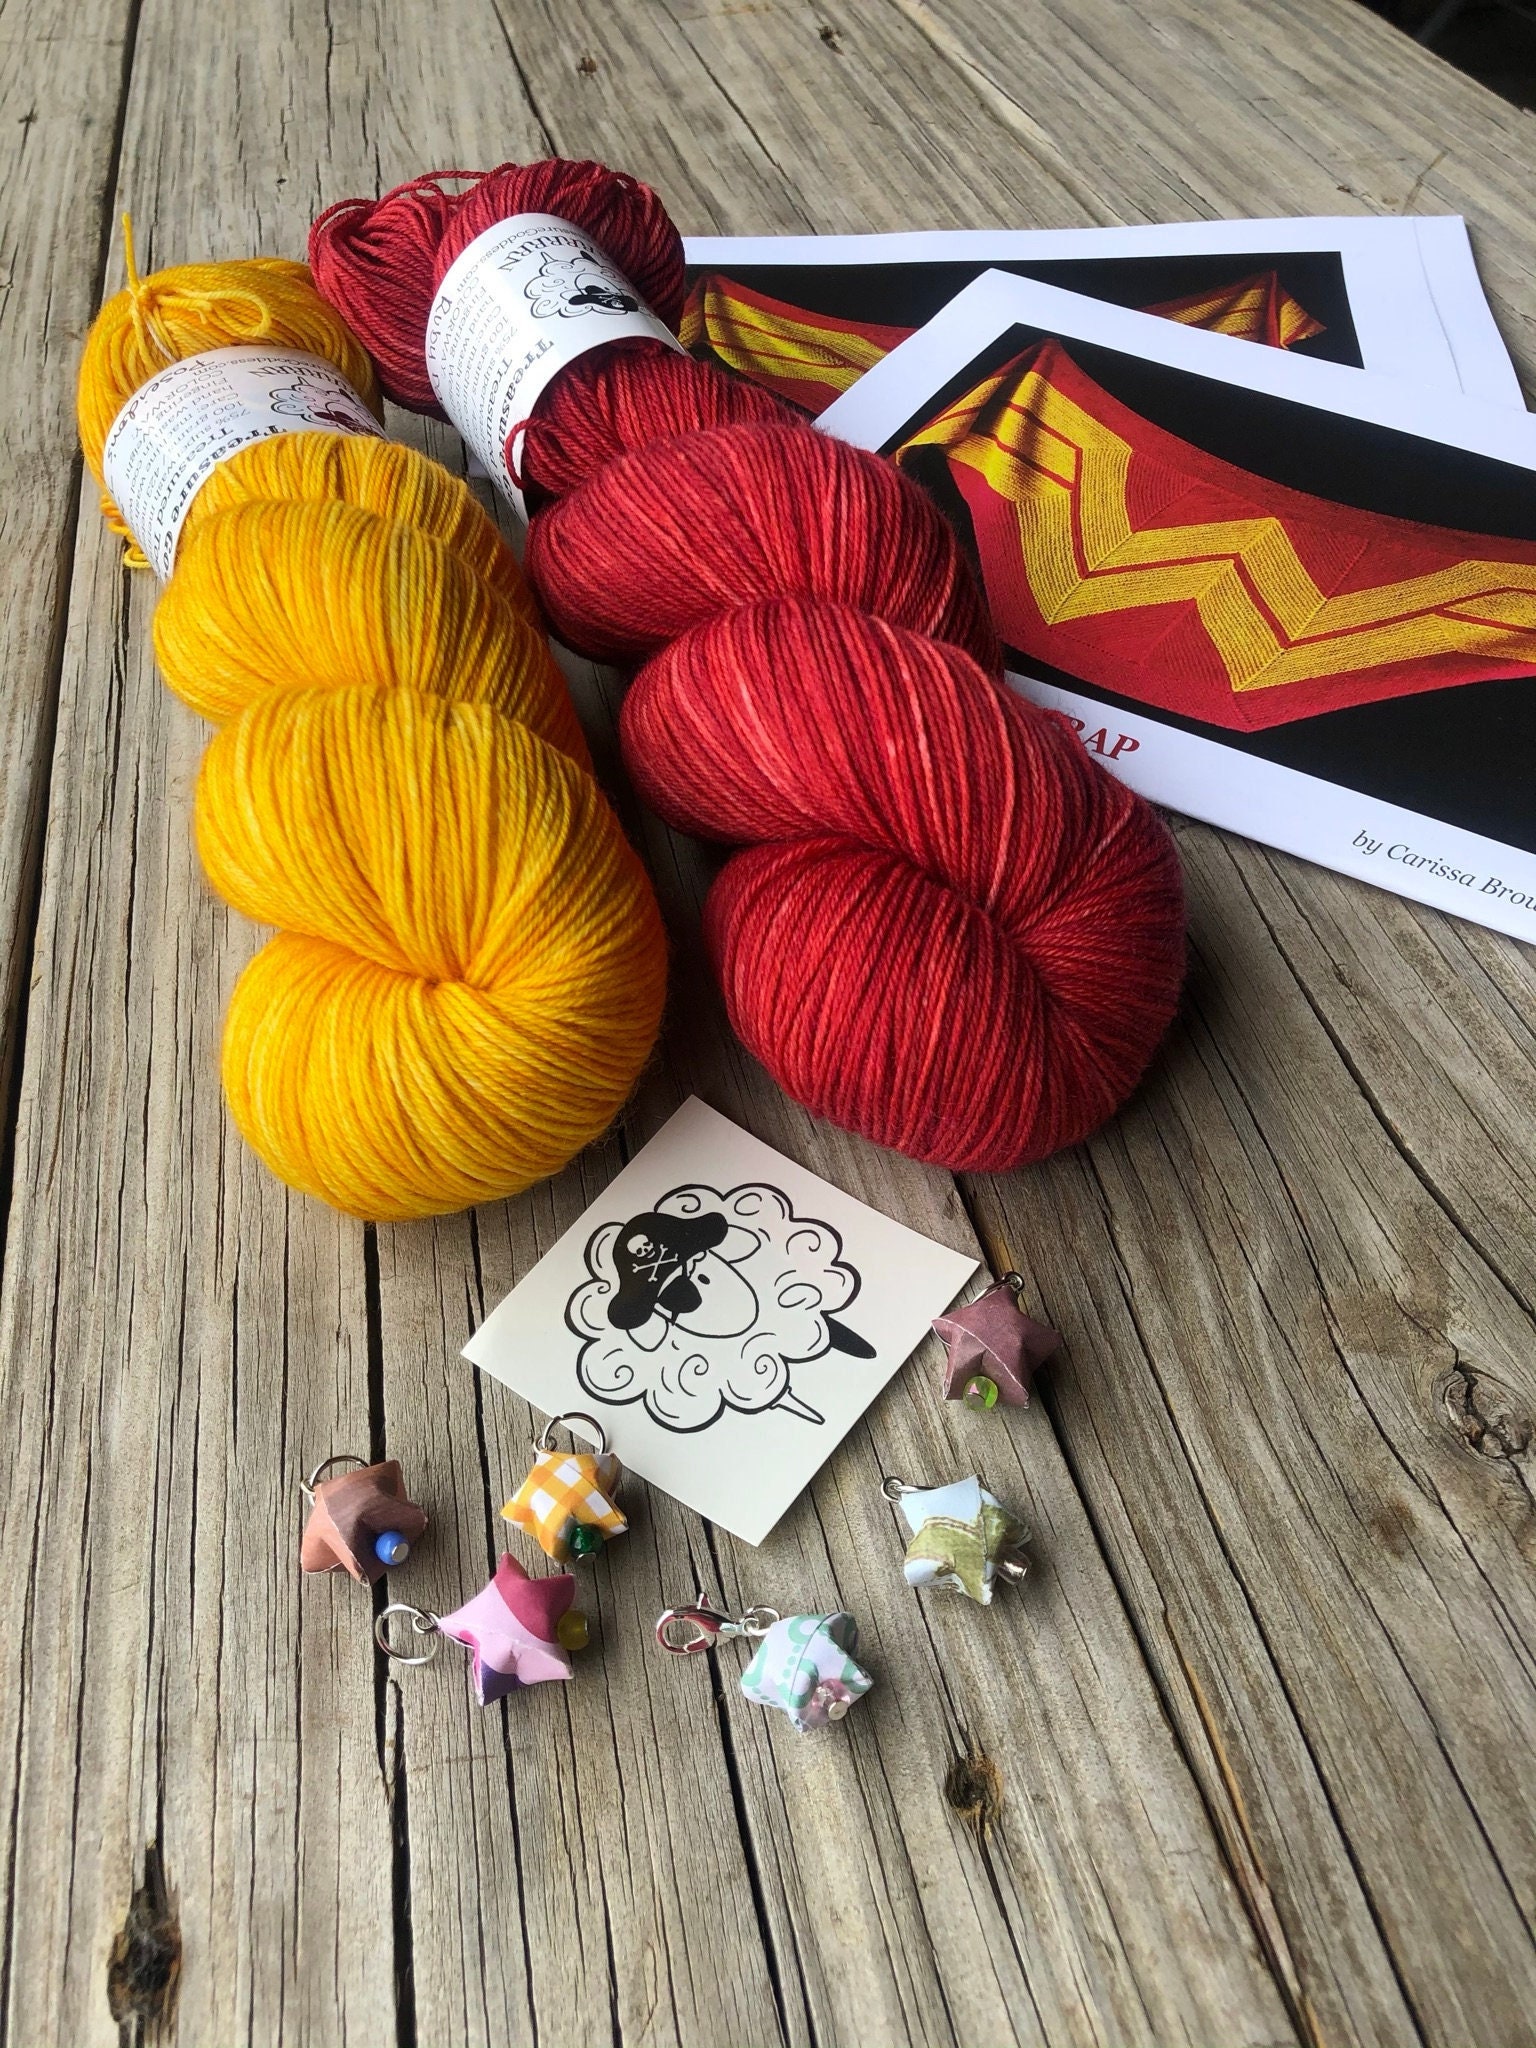 Wonder Woman Wrap Shawl Kit, Sock Yarn, Crochet Pattern and